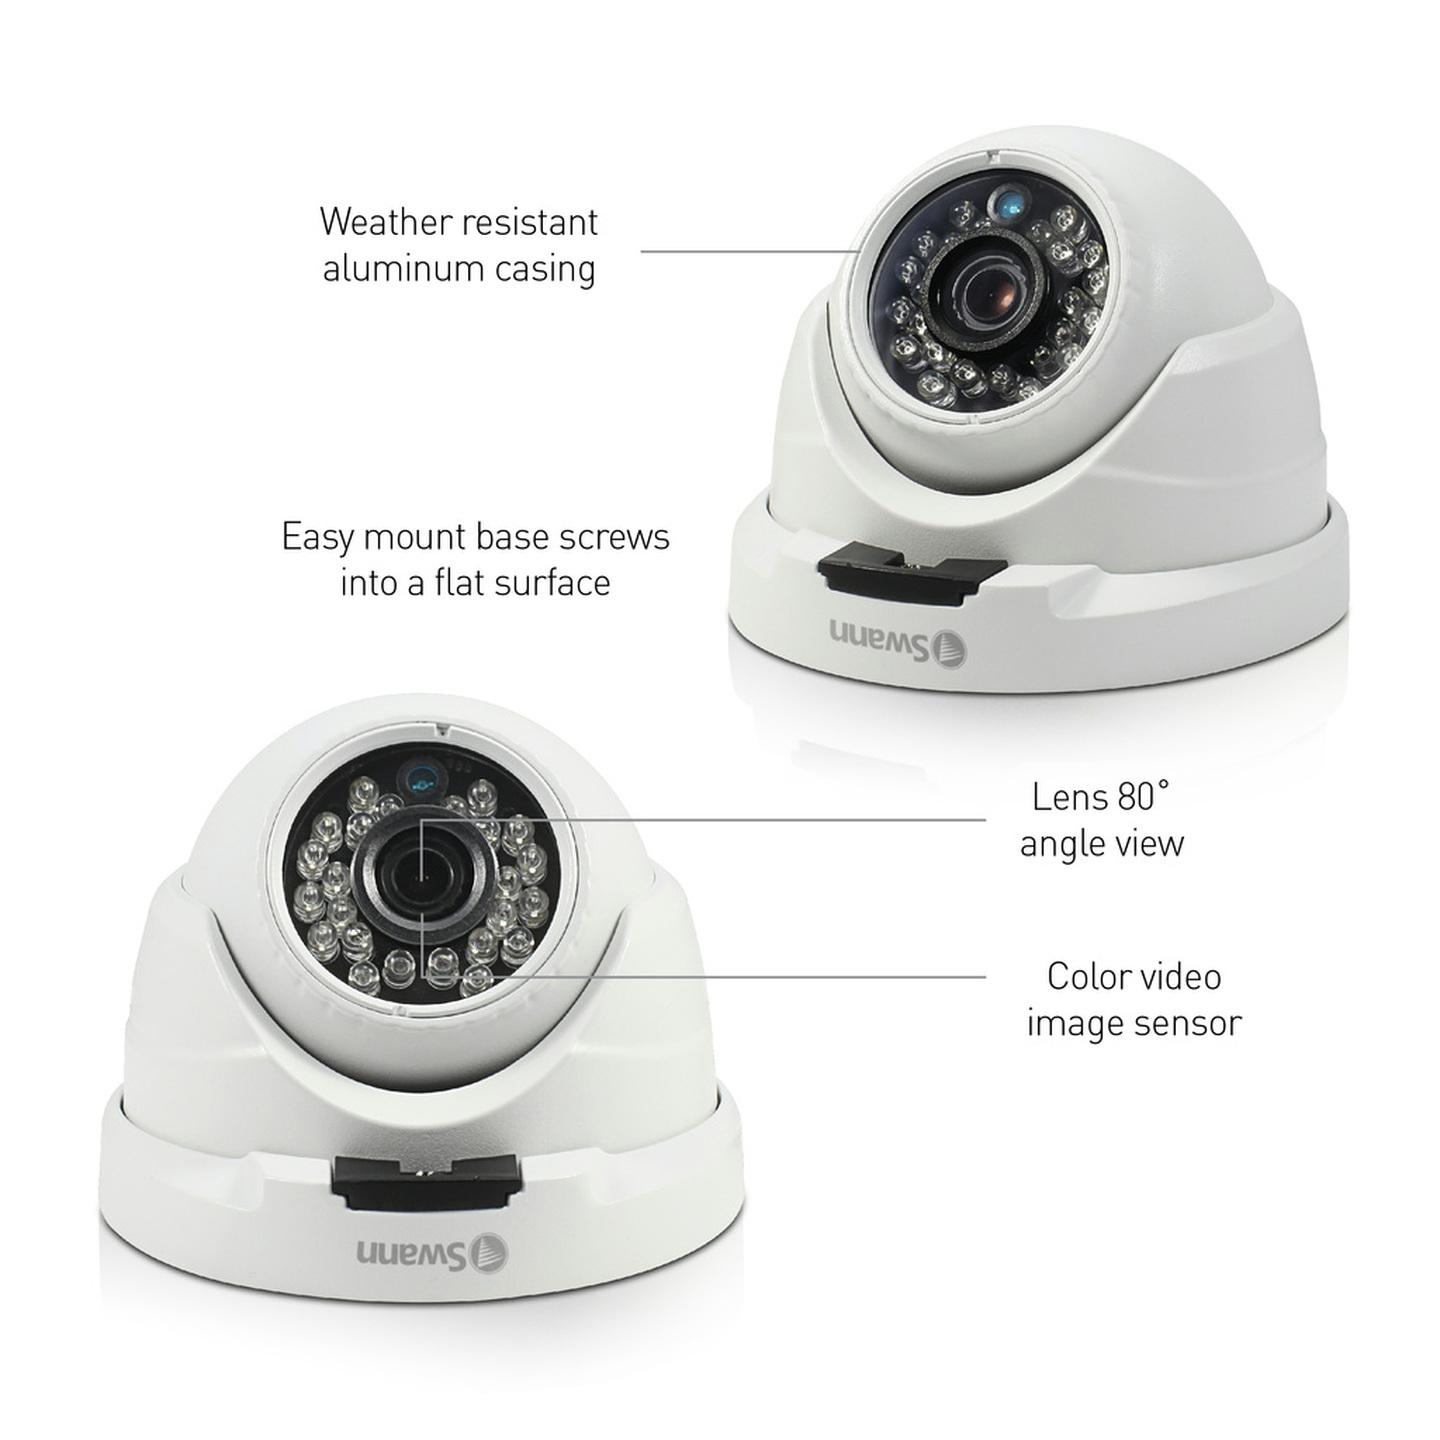 Swann 4MP IP Dome Camera